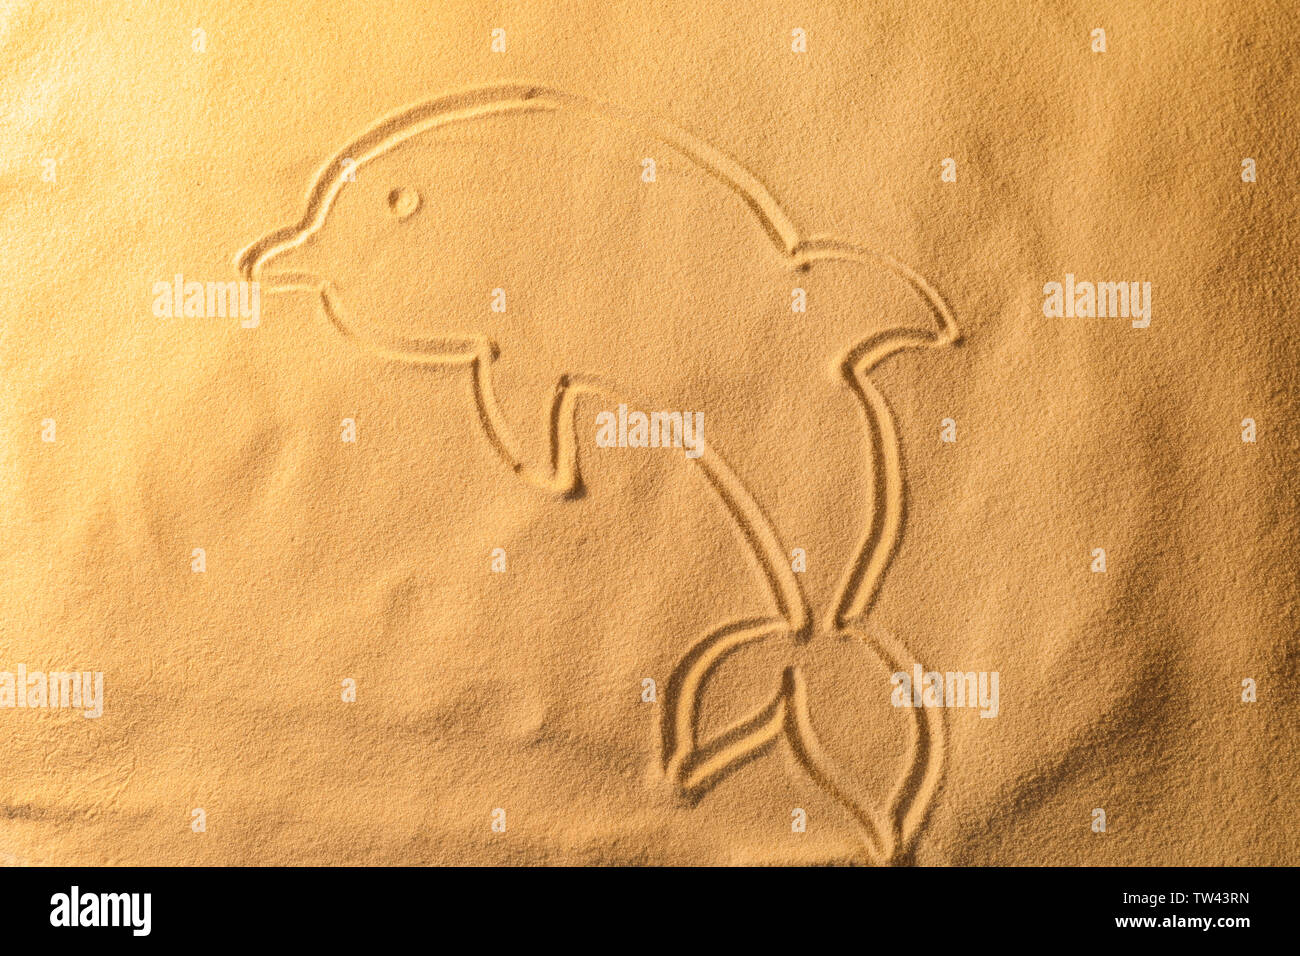 Dolphin drawn on sea sand, closeup view Stock Photo